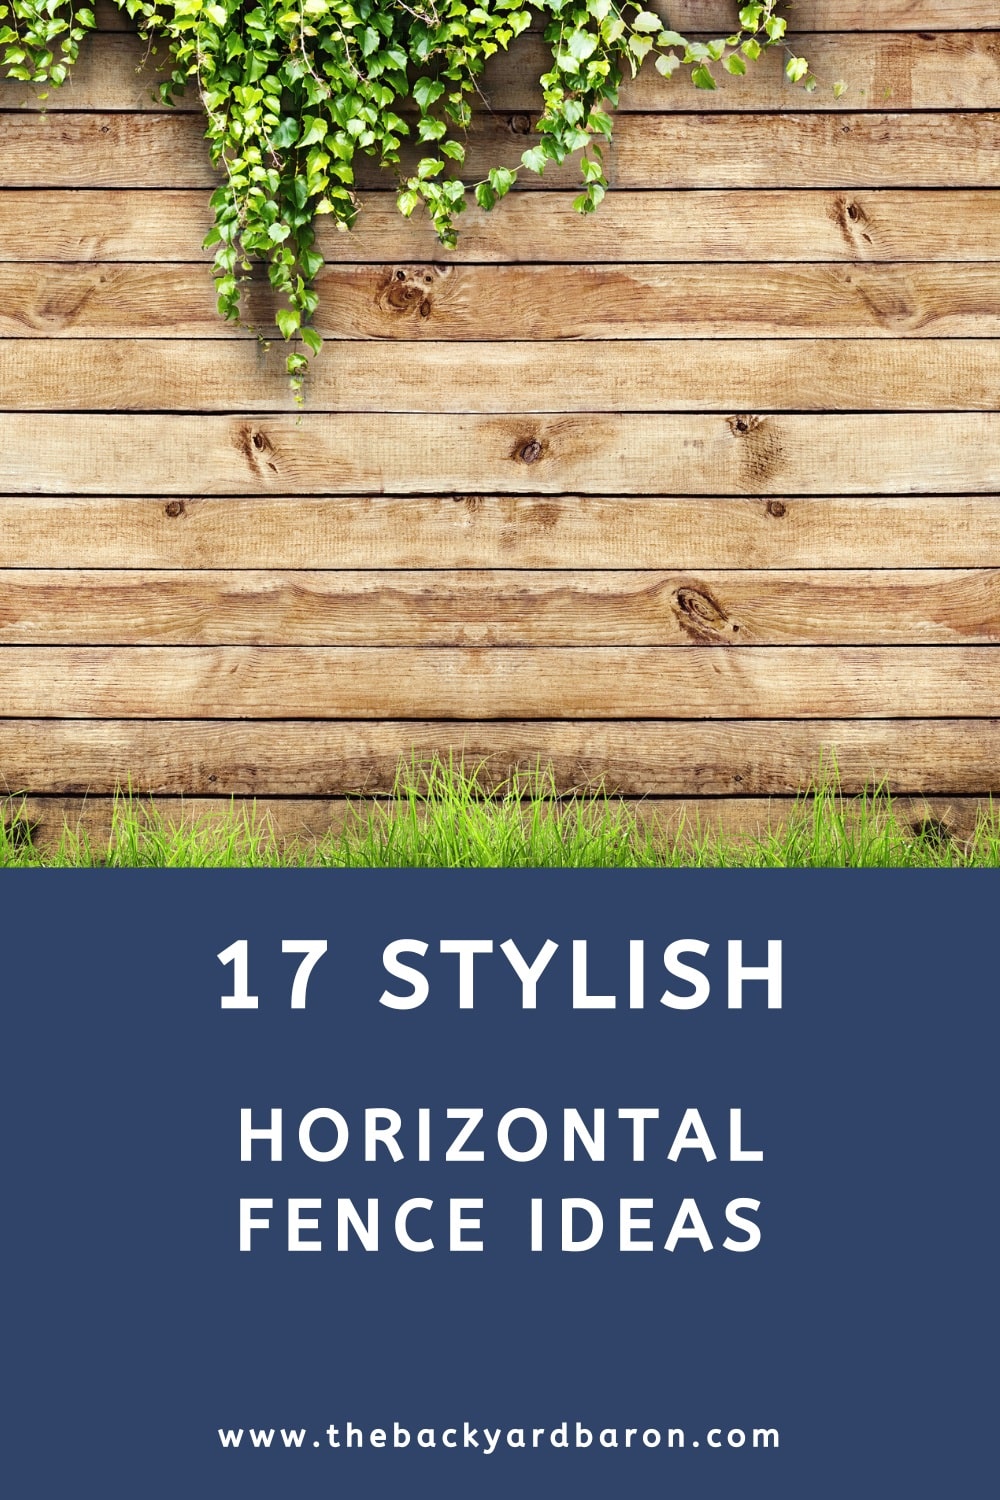 17 Stylish horizontal fence ideas for the backyard